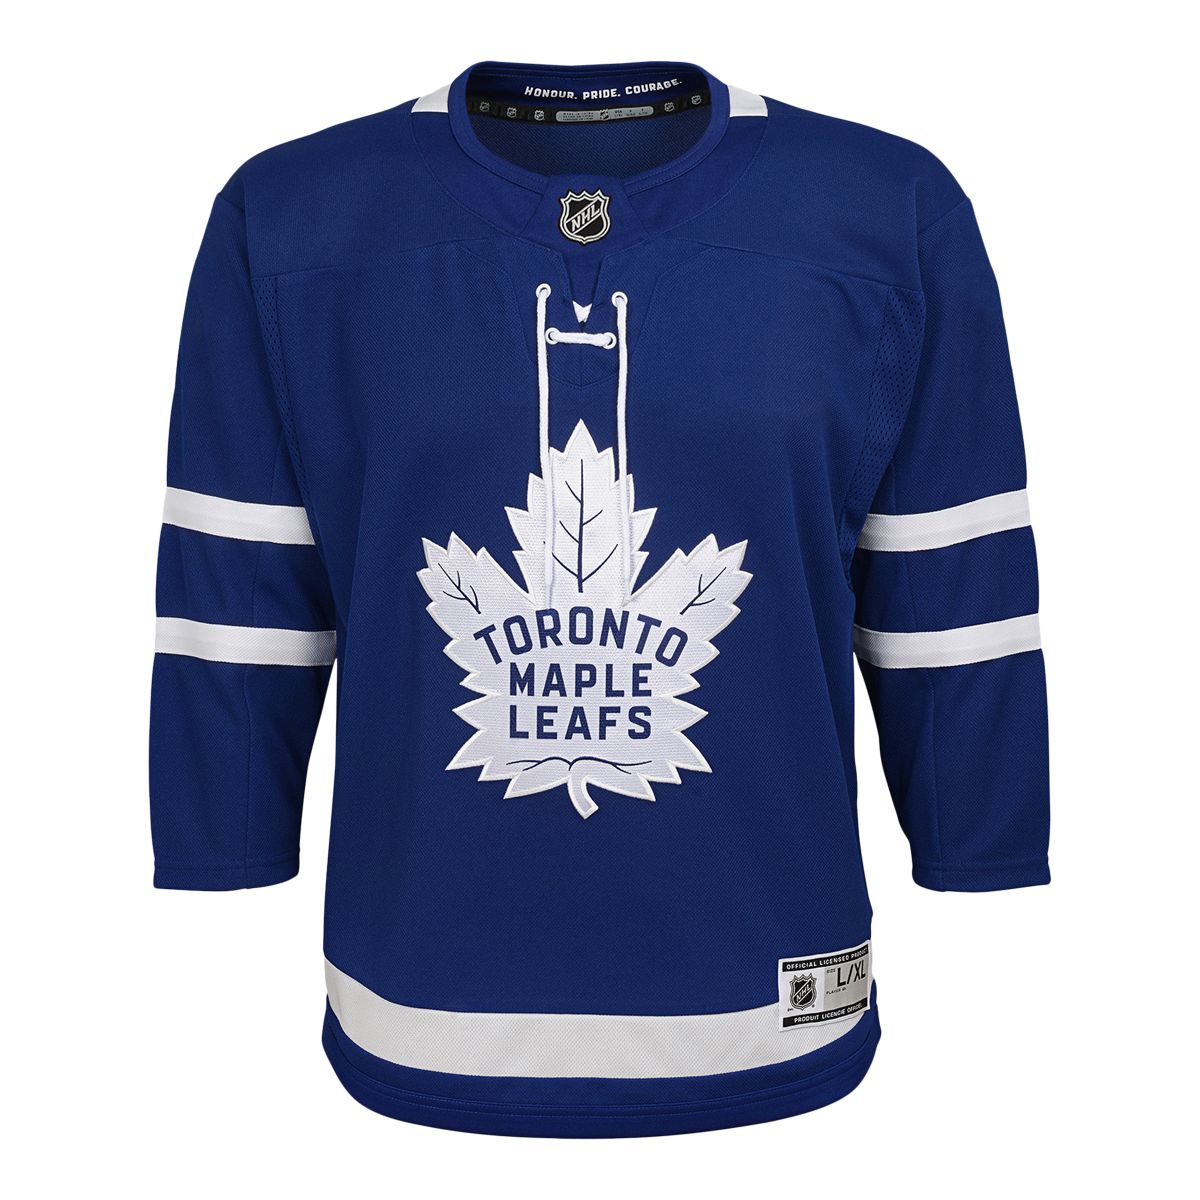 Toronto Maple Leafs Long Sleeve Bodysuit